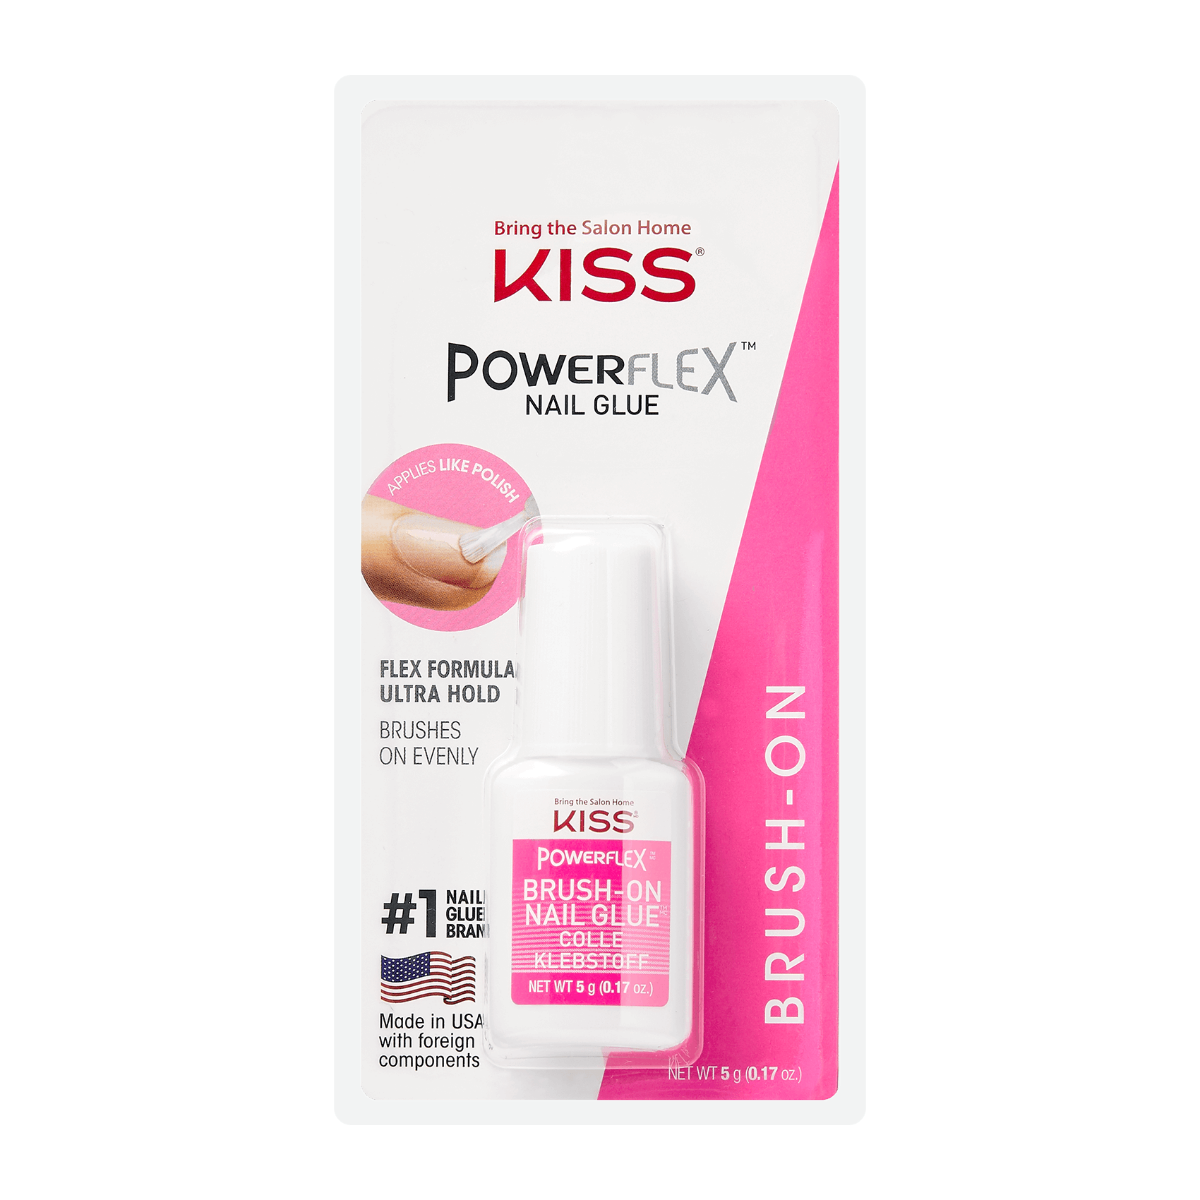 KISS POWERFLEX BRUSH-ON NAIL GLUE